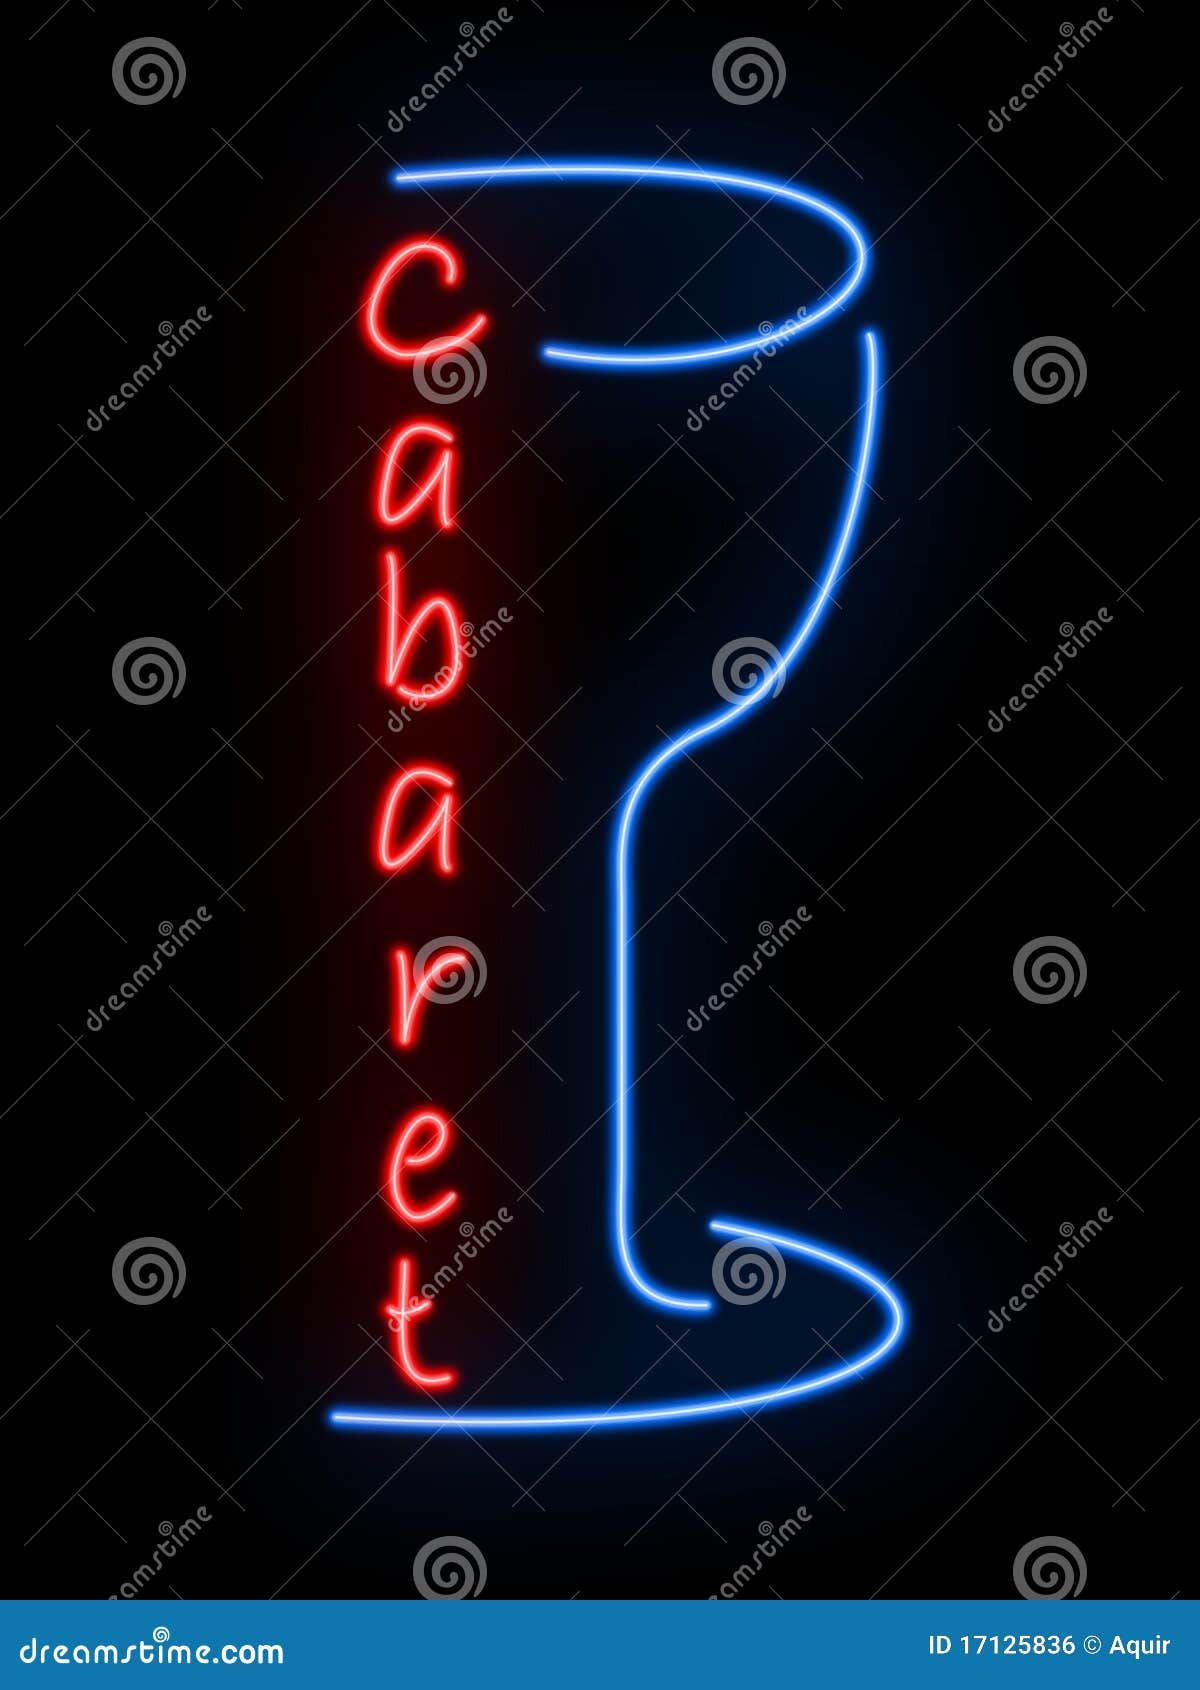 neon sign - cabaret